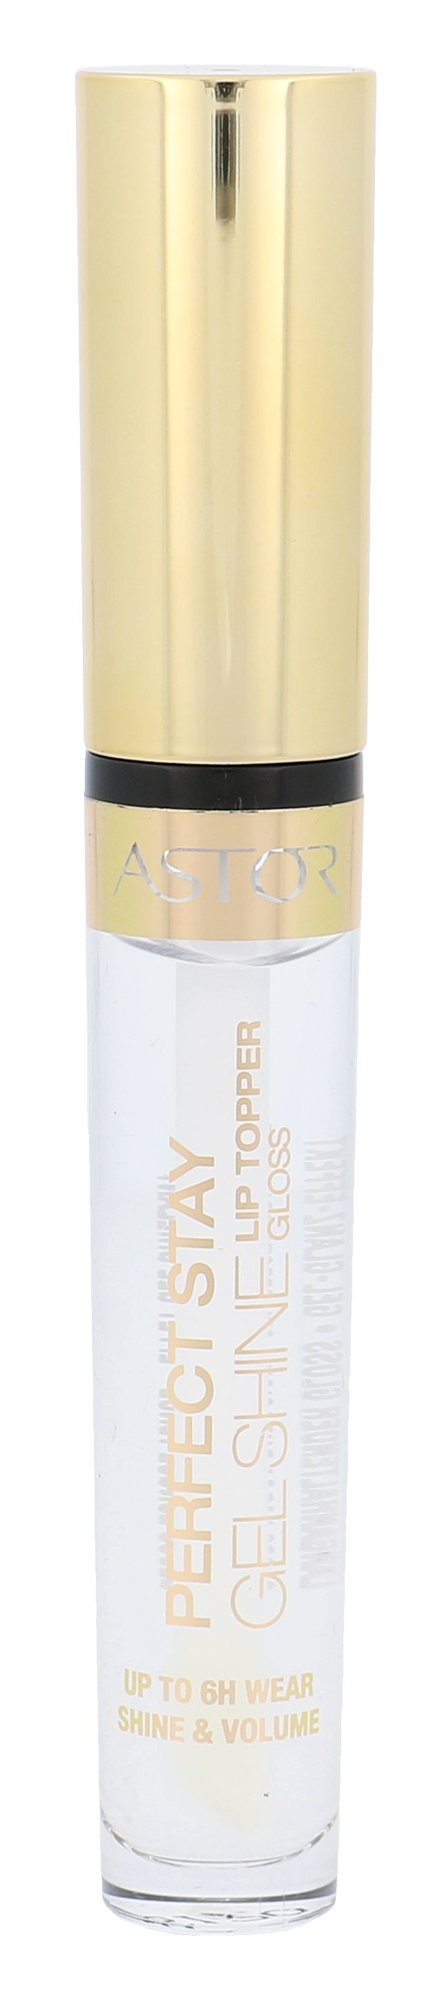 Astor Perfect Stay Gel Shine lūpų blizgesys